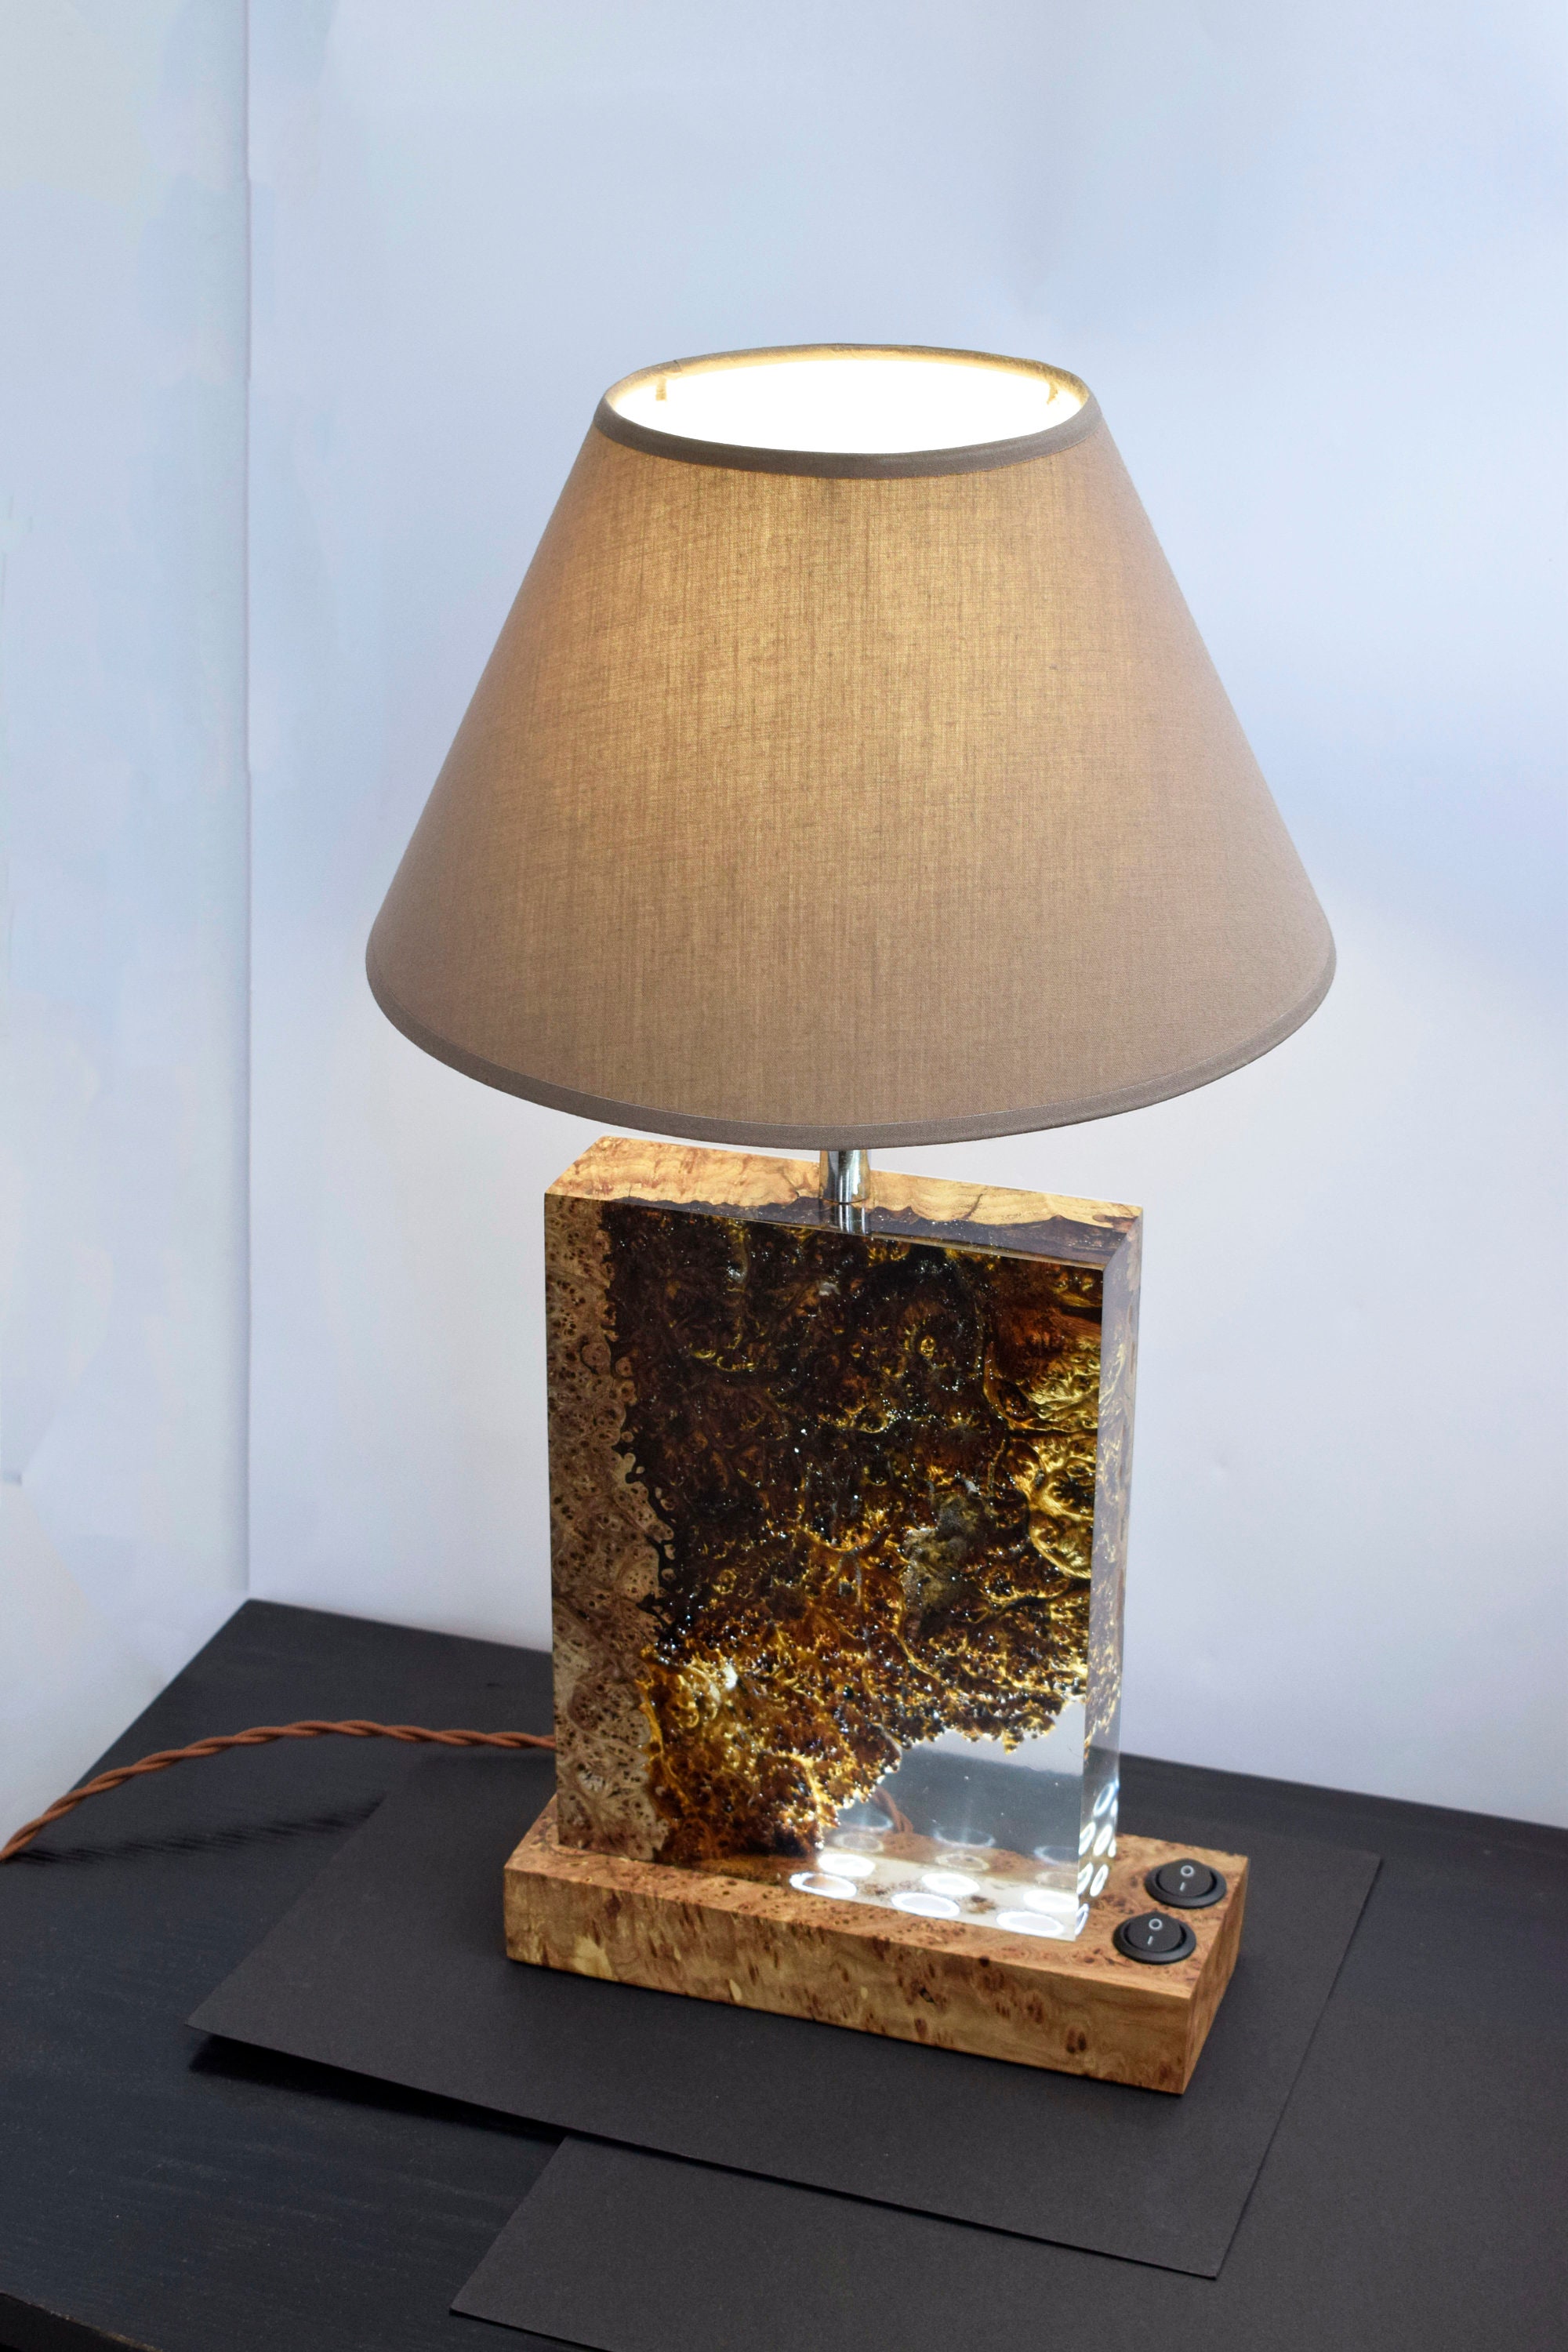 Epoxy Lamp,burl Wood Lamp,epoxy Night Light,wooden Lamp,table Lamp,bedside  Lamp,living Room Lamp,handmade Night Lamp,wooden Epoxy Lighting 